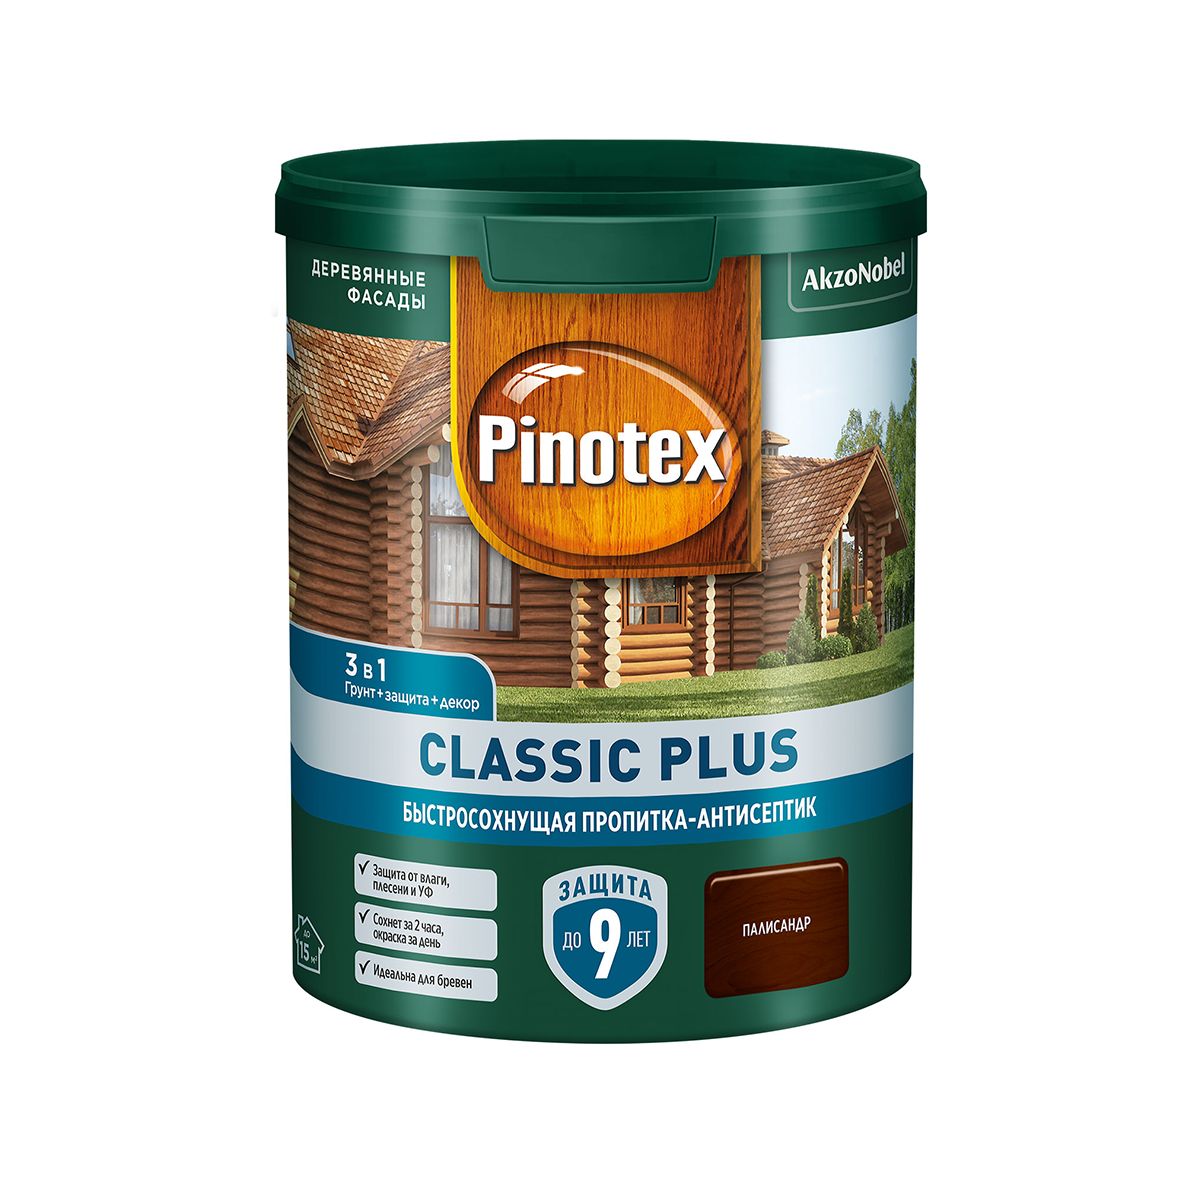 Пропитка-антисептик Pinotex Classic Plus 3 в 1,быстросохнущая, палисандр, 900 мл пирилакс classic пропитка антисептик для древесины 6 кг